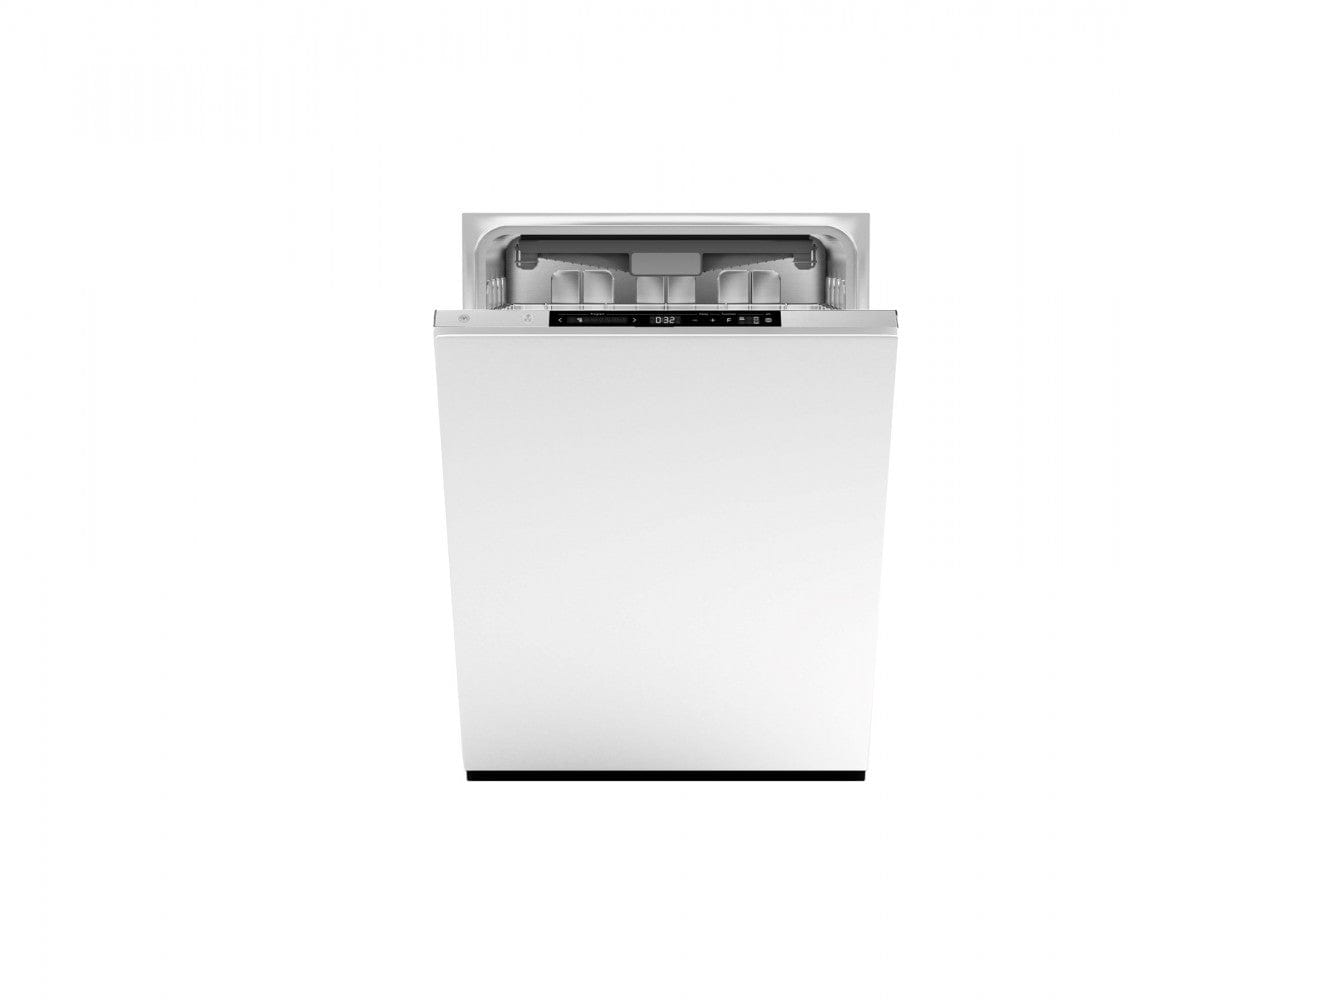 Bertazzoni Heritage Series 60 cm Fully Integrated Dishwasher, DW6083PRTS